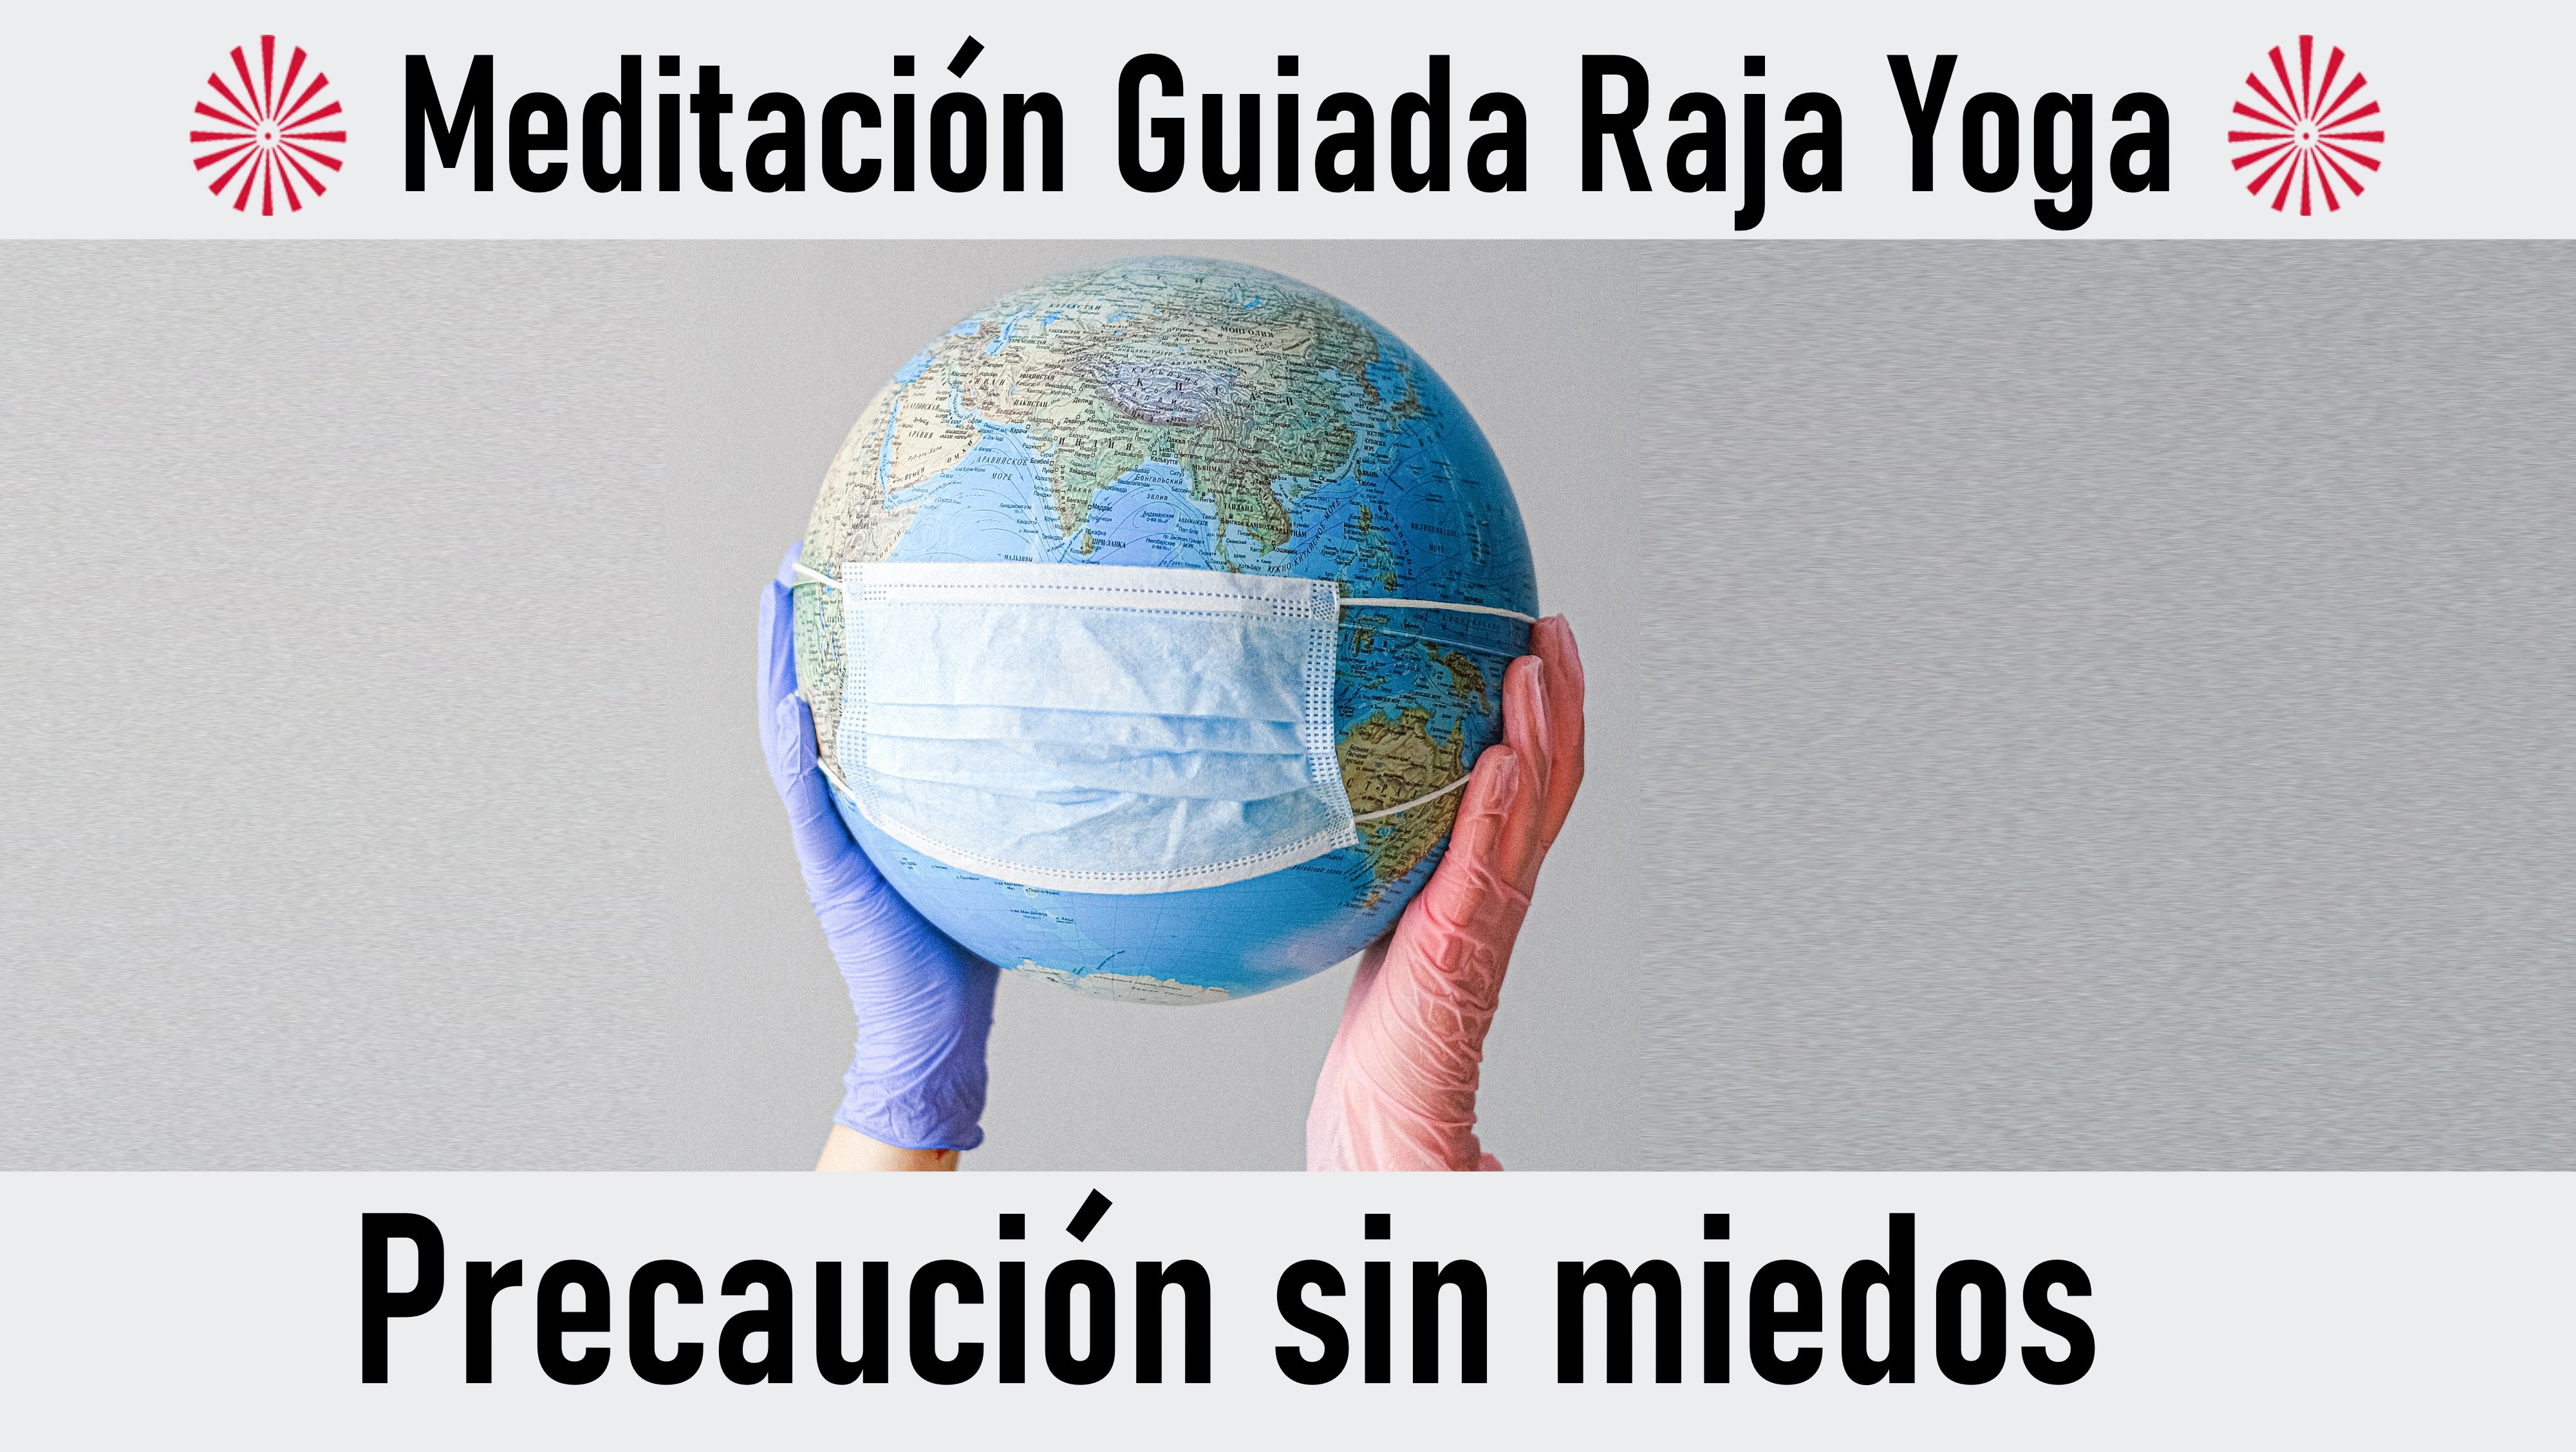 Meditación Raja Yoga: Precaución sin miedos (1 Noviembre 2020) On-line desde Valencia